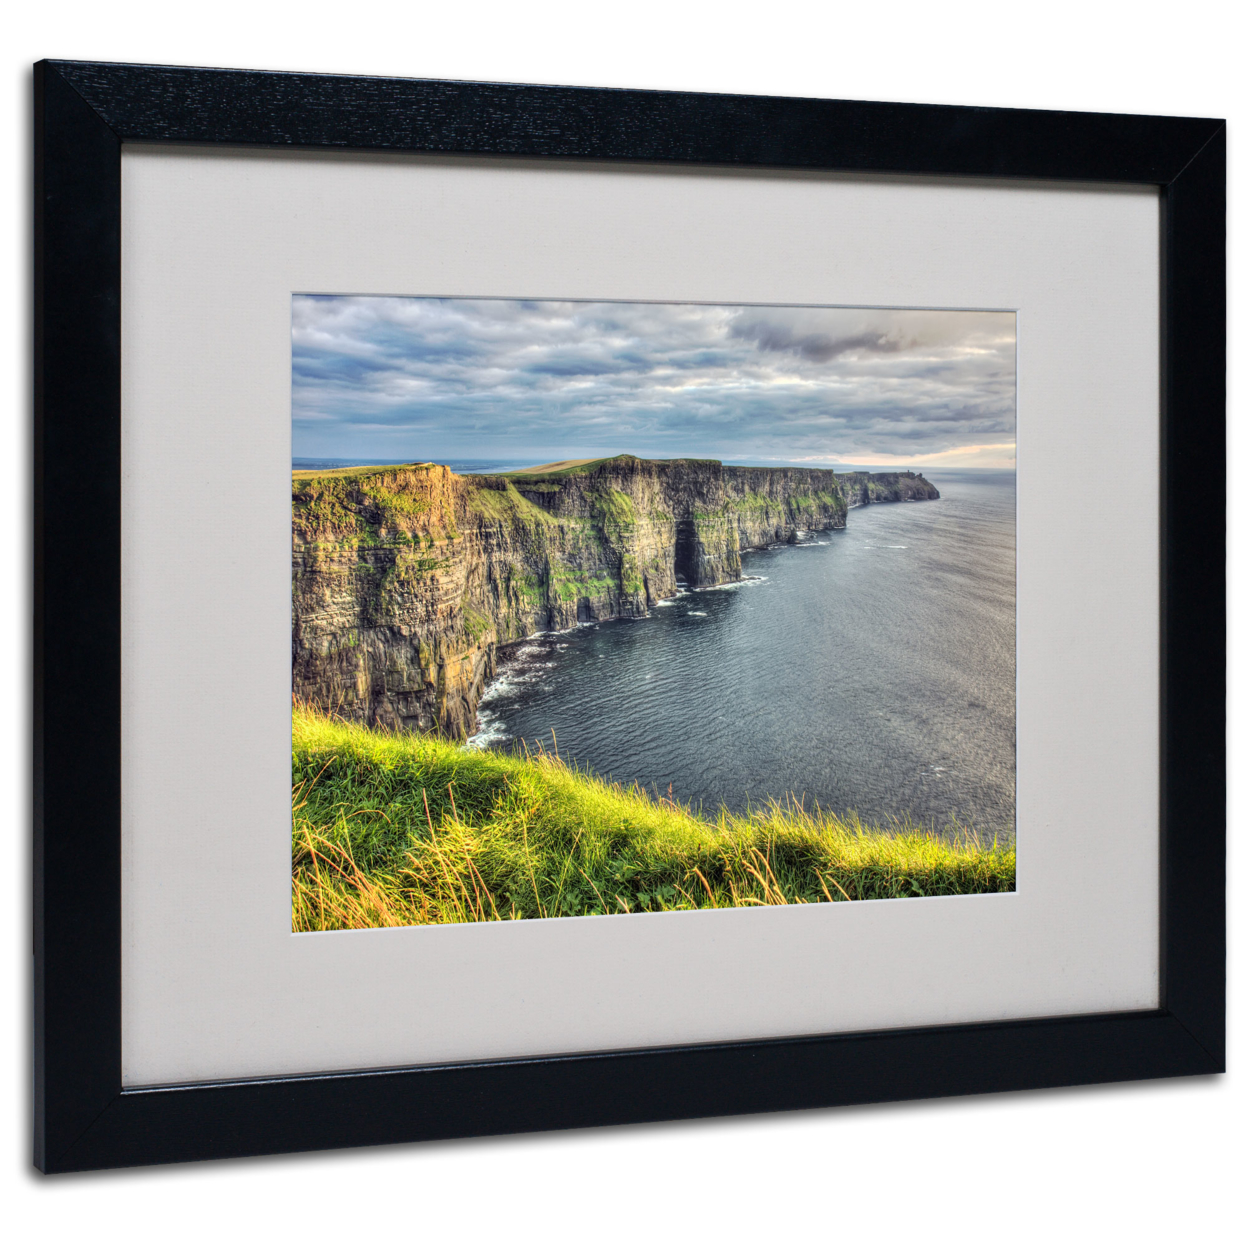 Pierre Leclerc 'Cliffs Of Moher Ireland' Black Wooden Framed Art 18 X 22 Inches